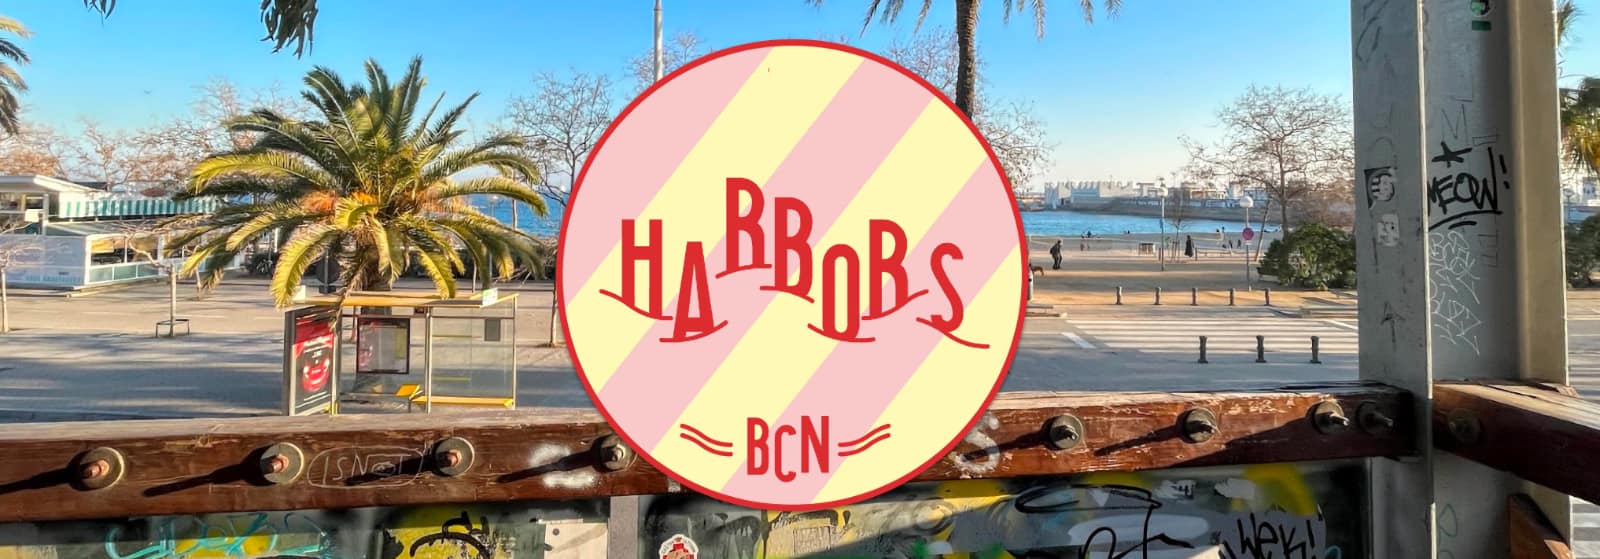 Harbors Barcelona